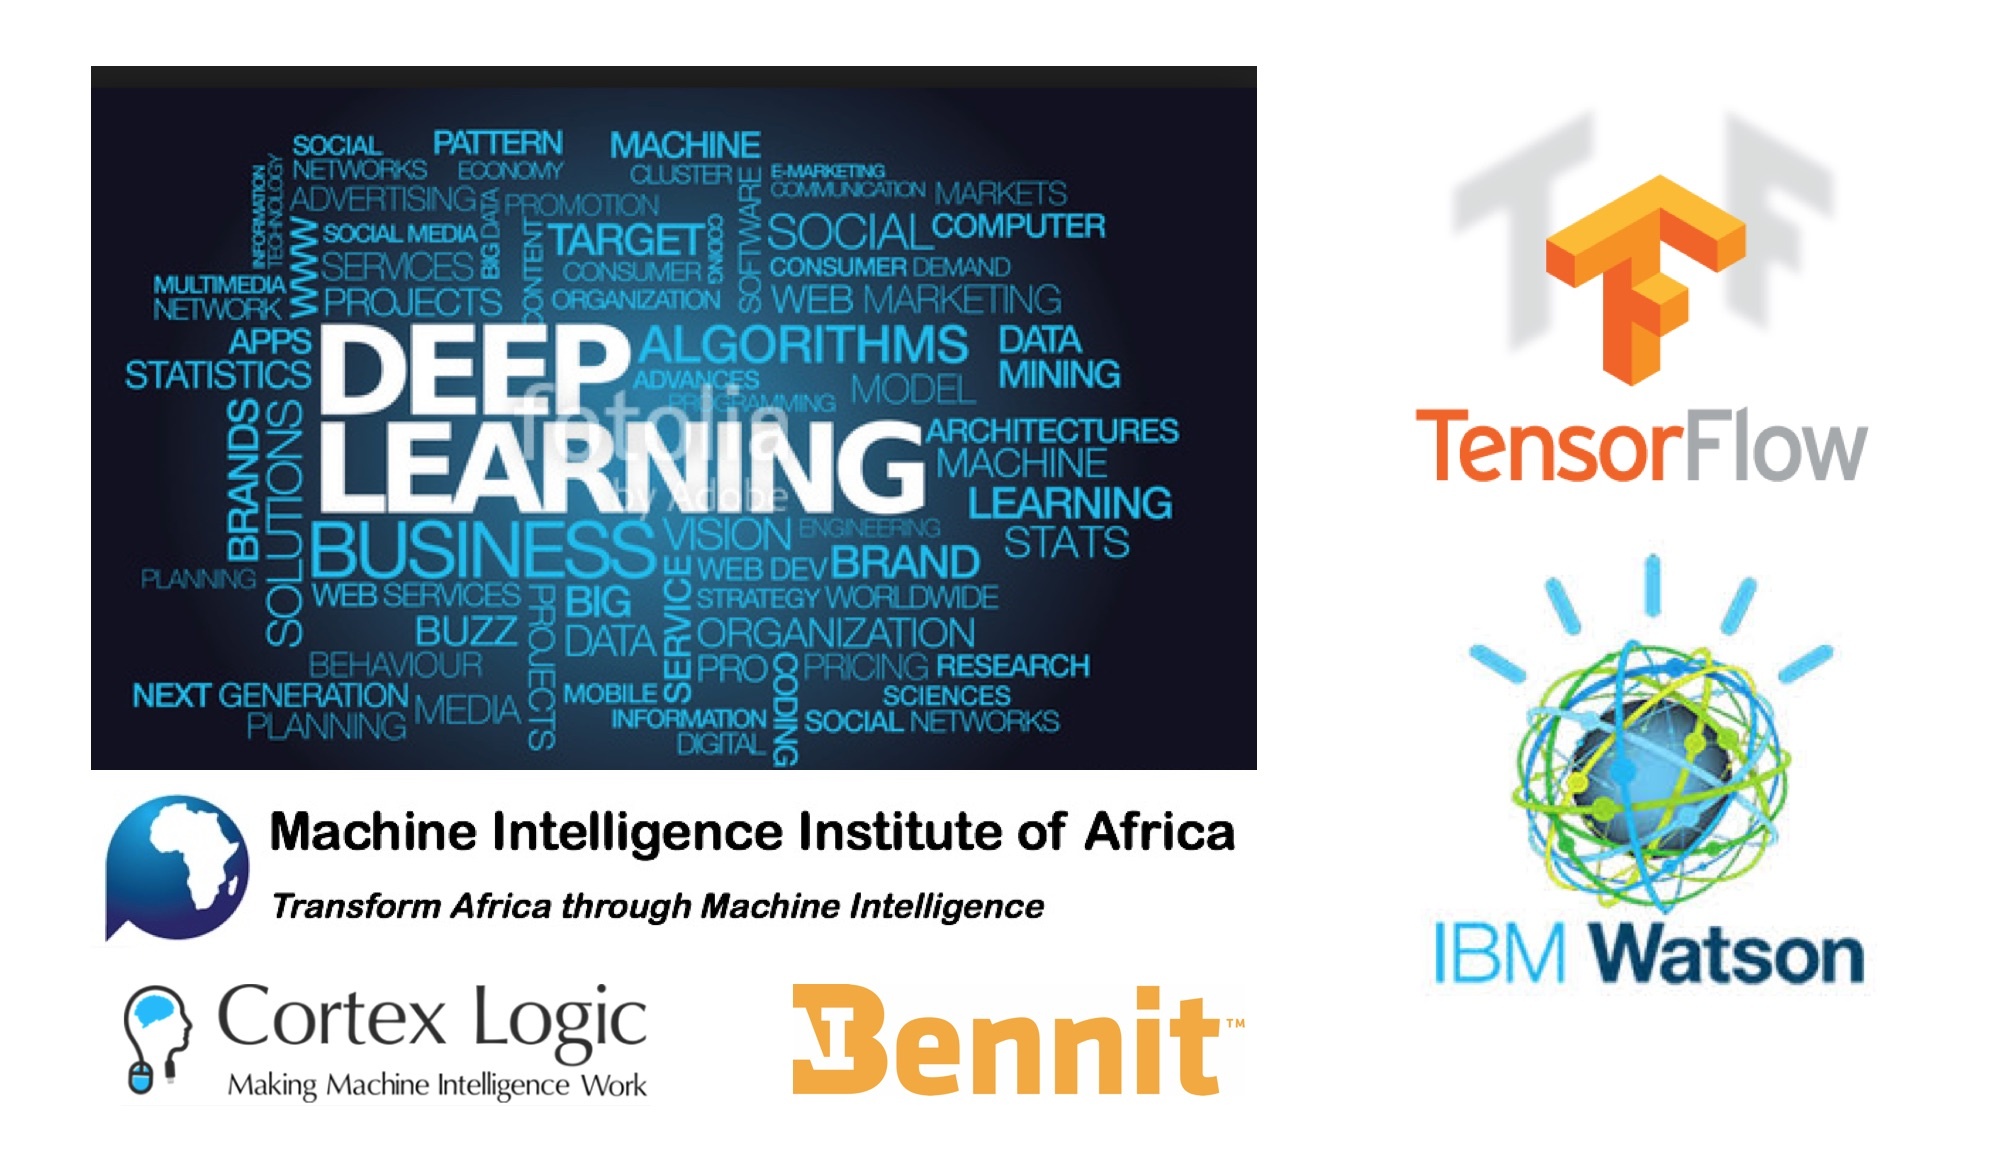 Deep Learning, Google TensorFlow, IBM Watson, and AI conversational systems